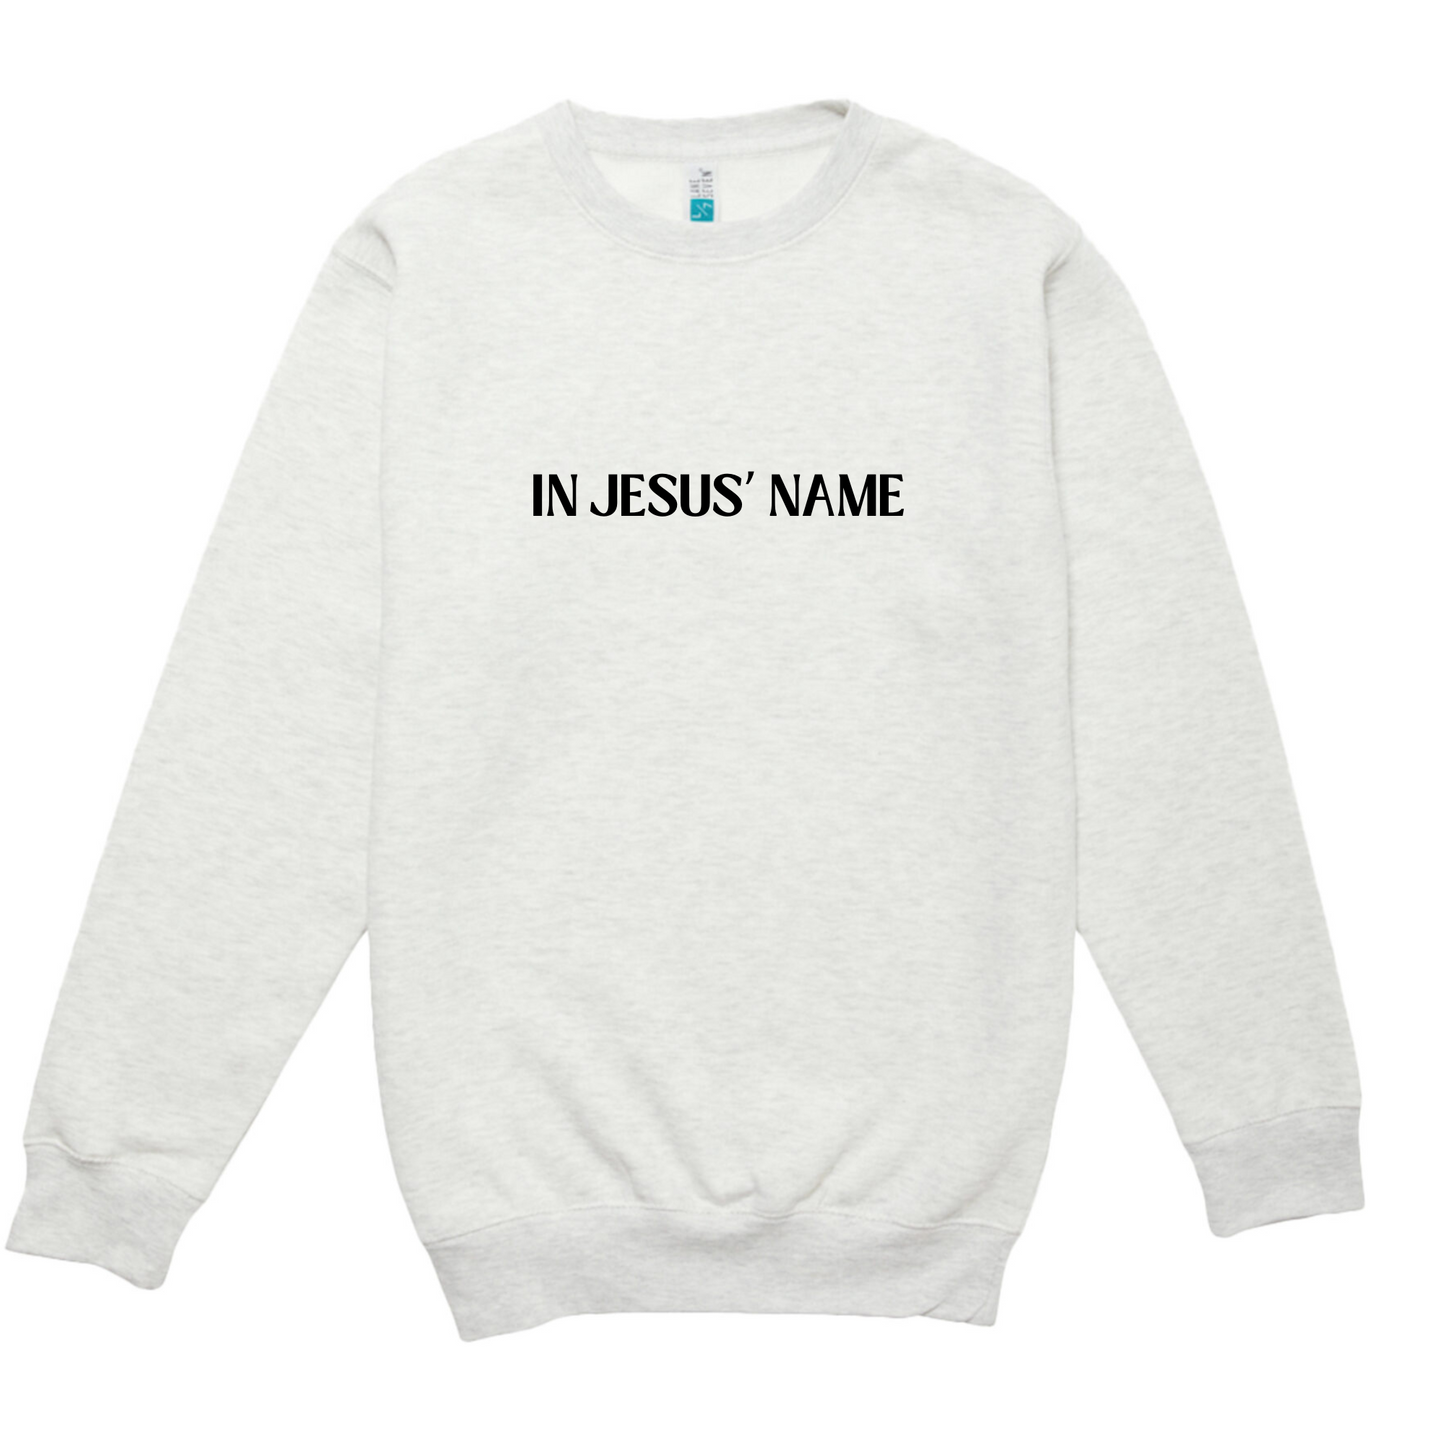 In Jesus' Name Crew Neck Sweater